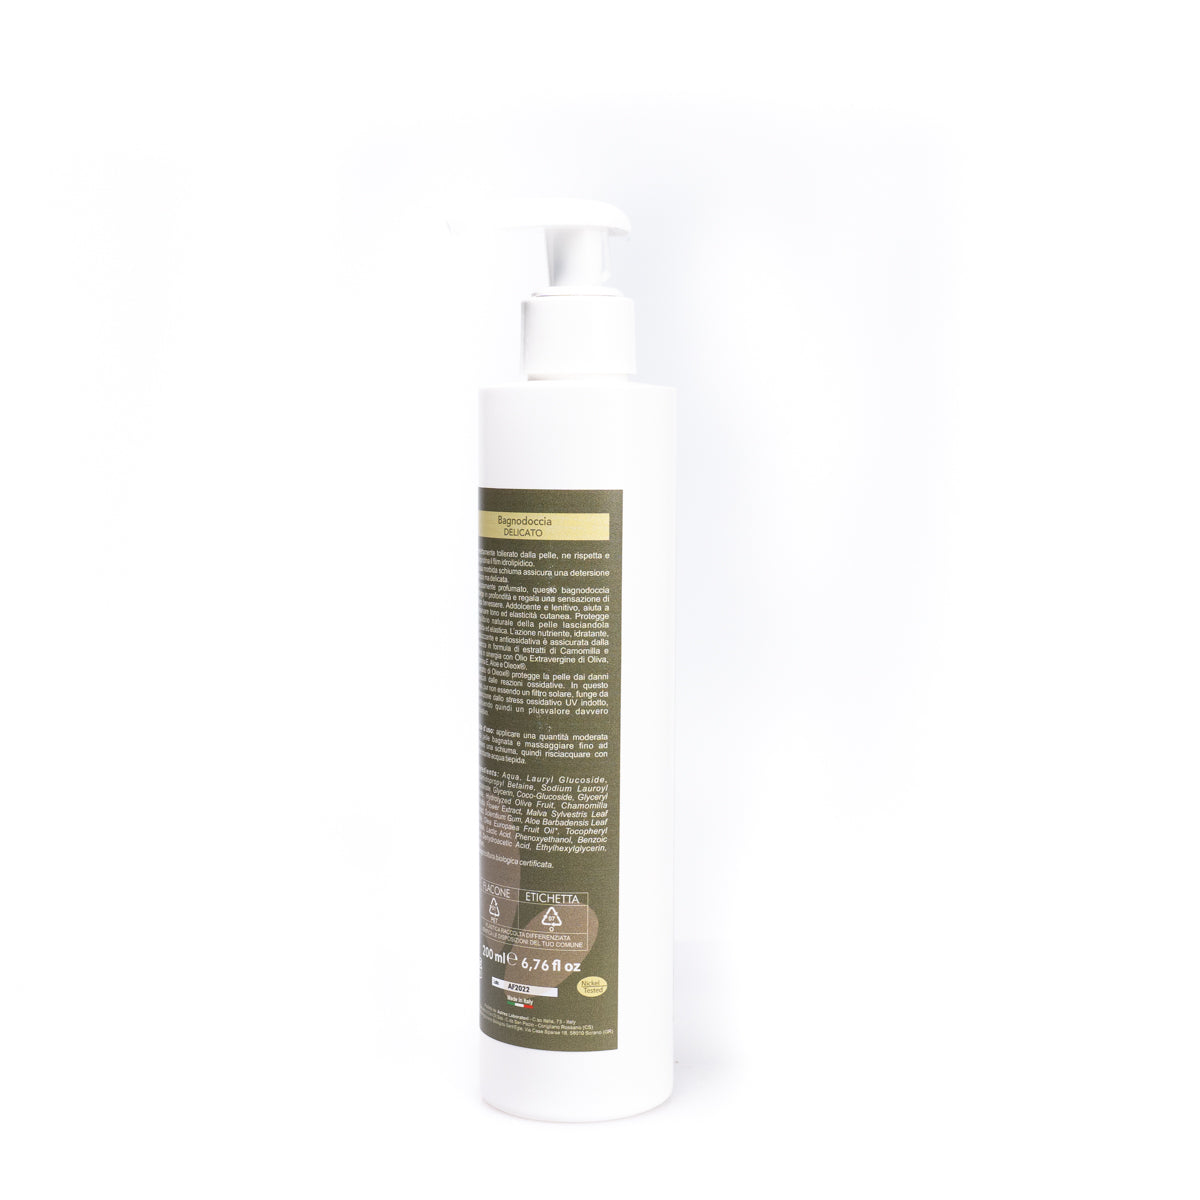 Shower bodywash, organic soap with E.V.O. oil, 200 ml